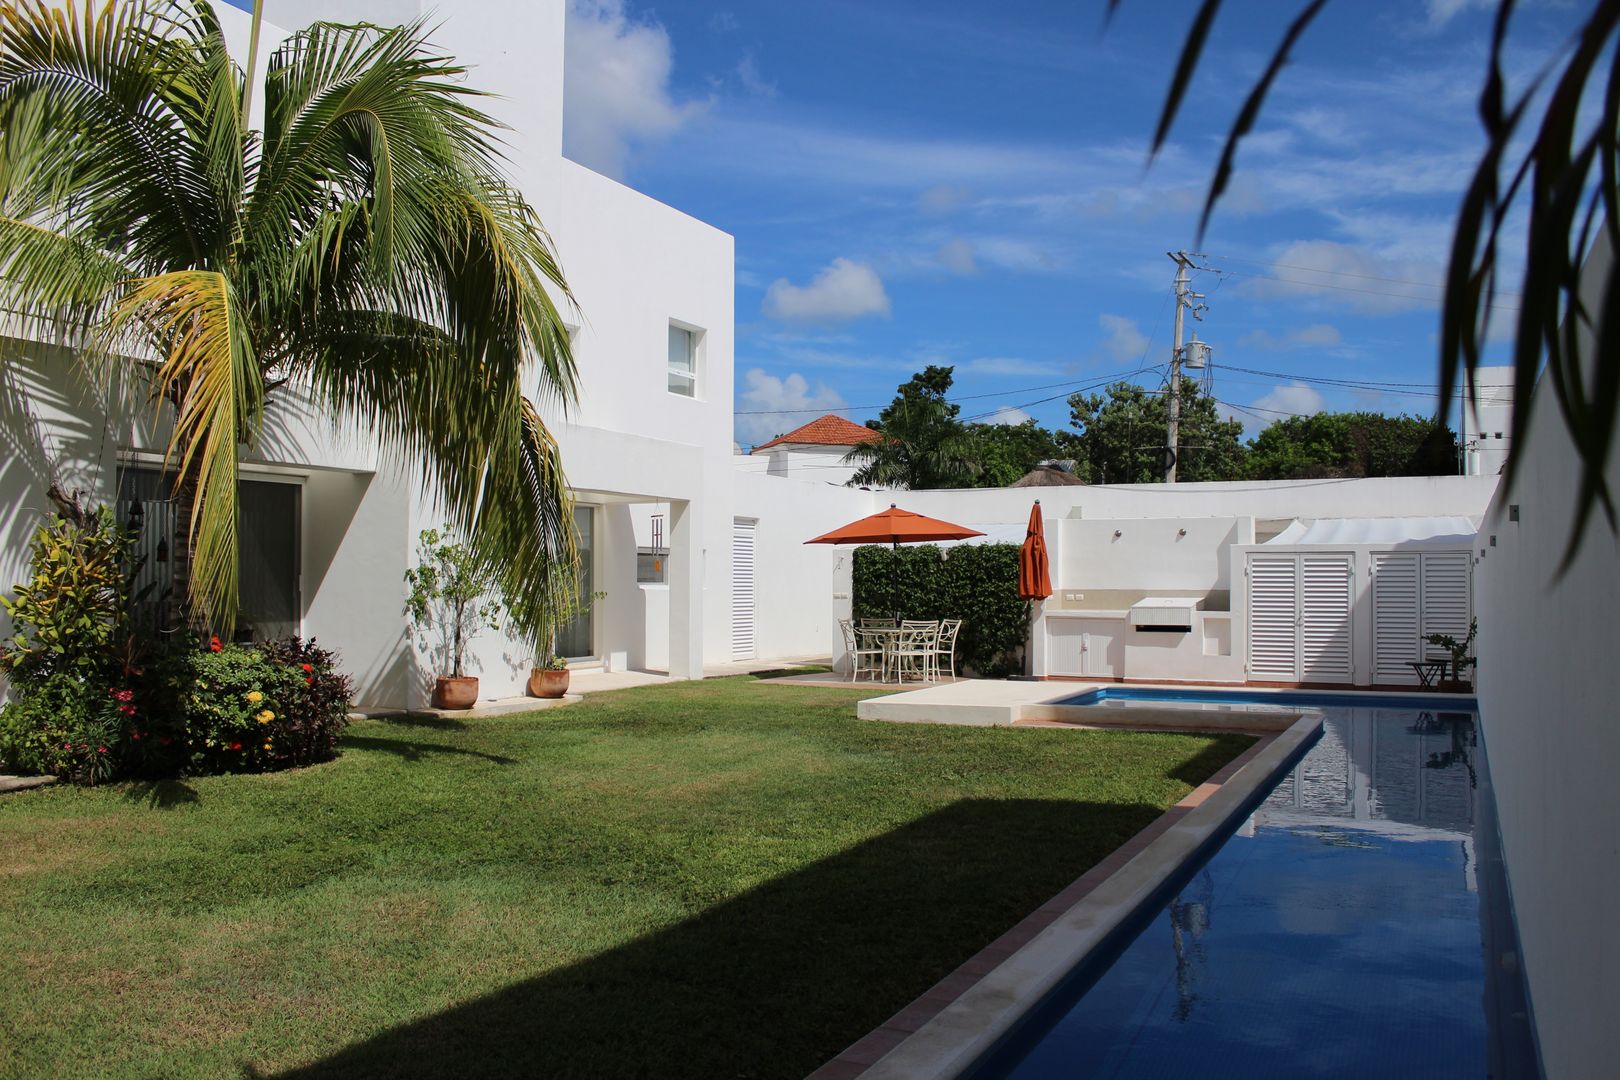 Casa habitacion en en Cozumel Quintana Roo, A2 HOMES SA DE CV A2 HOMES SA DE CV Minimalist Evler